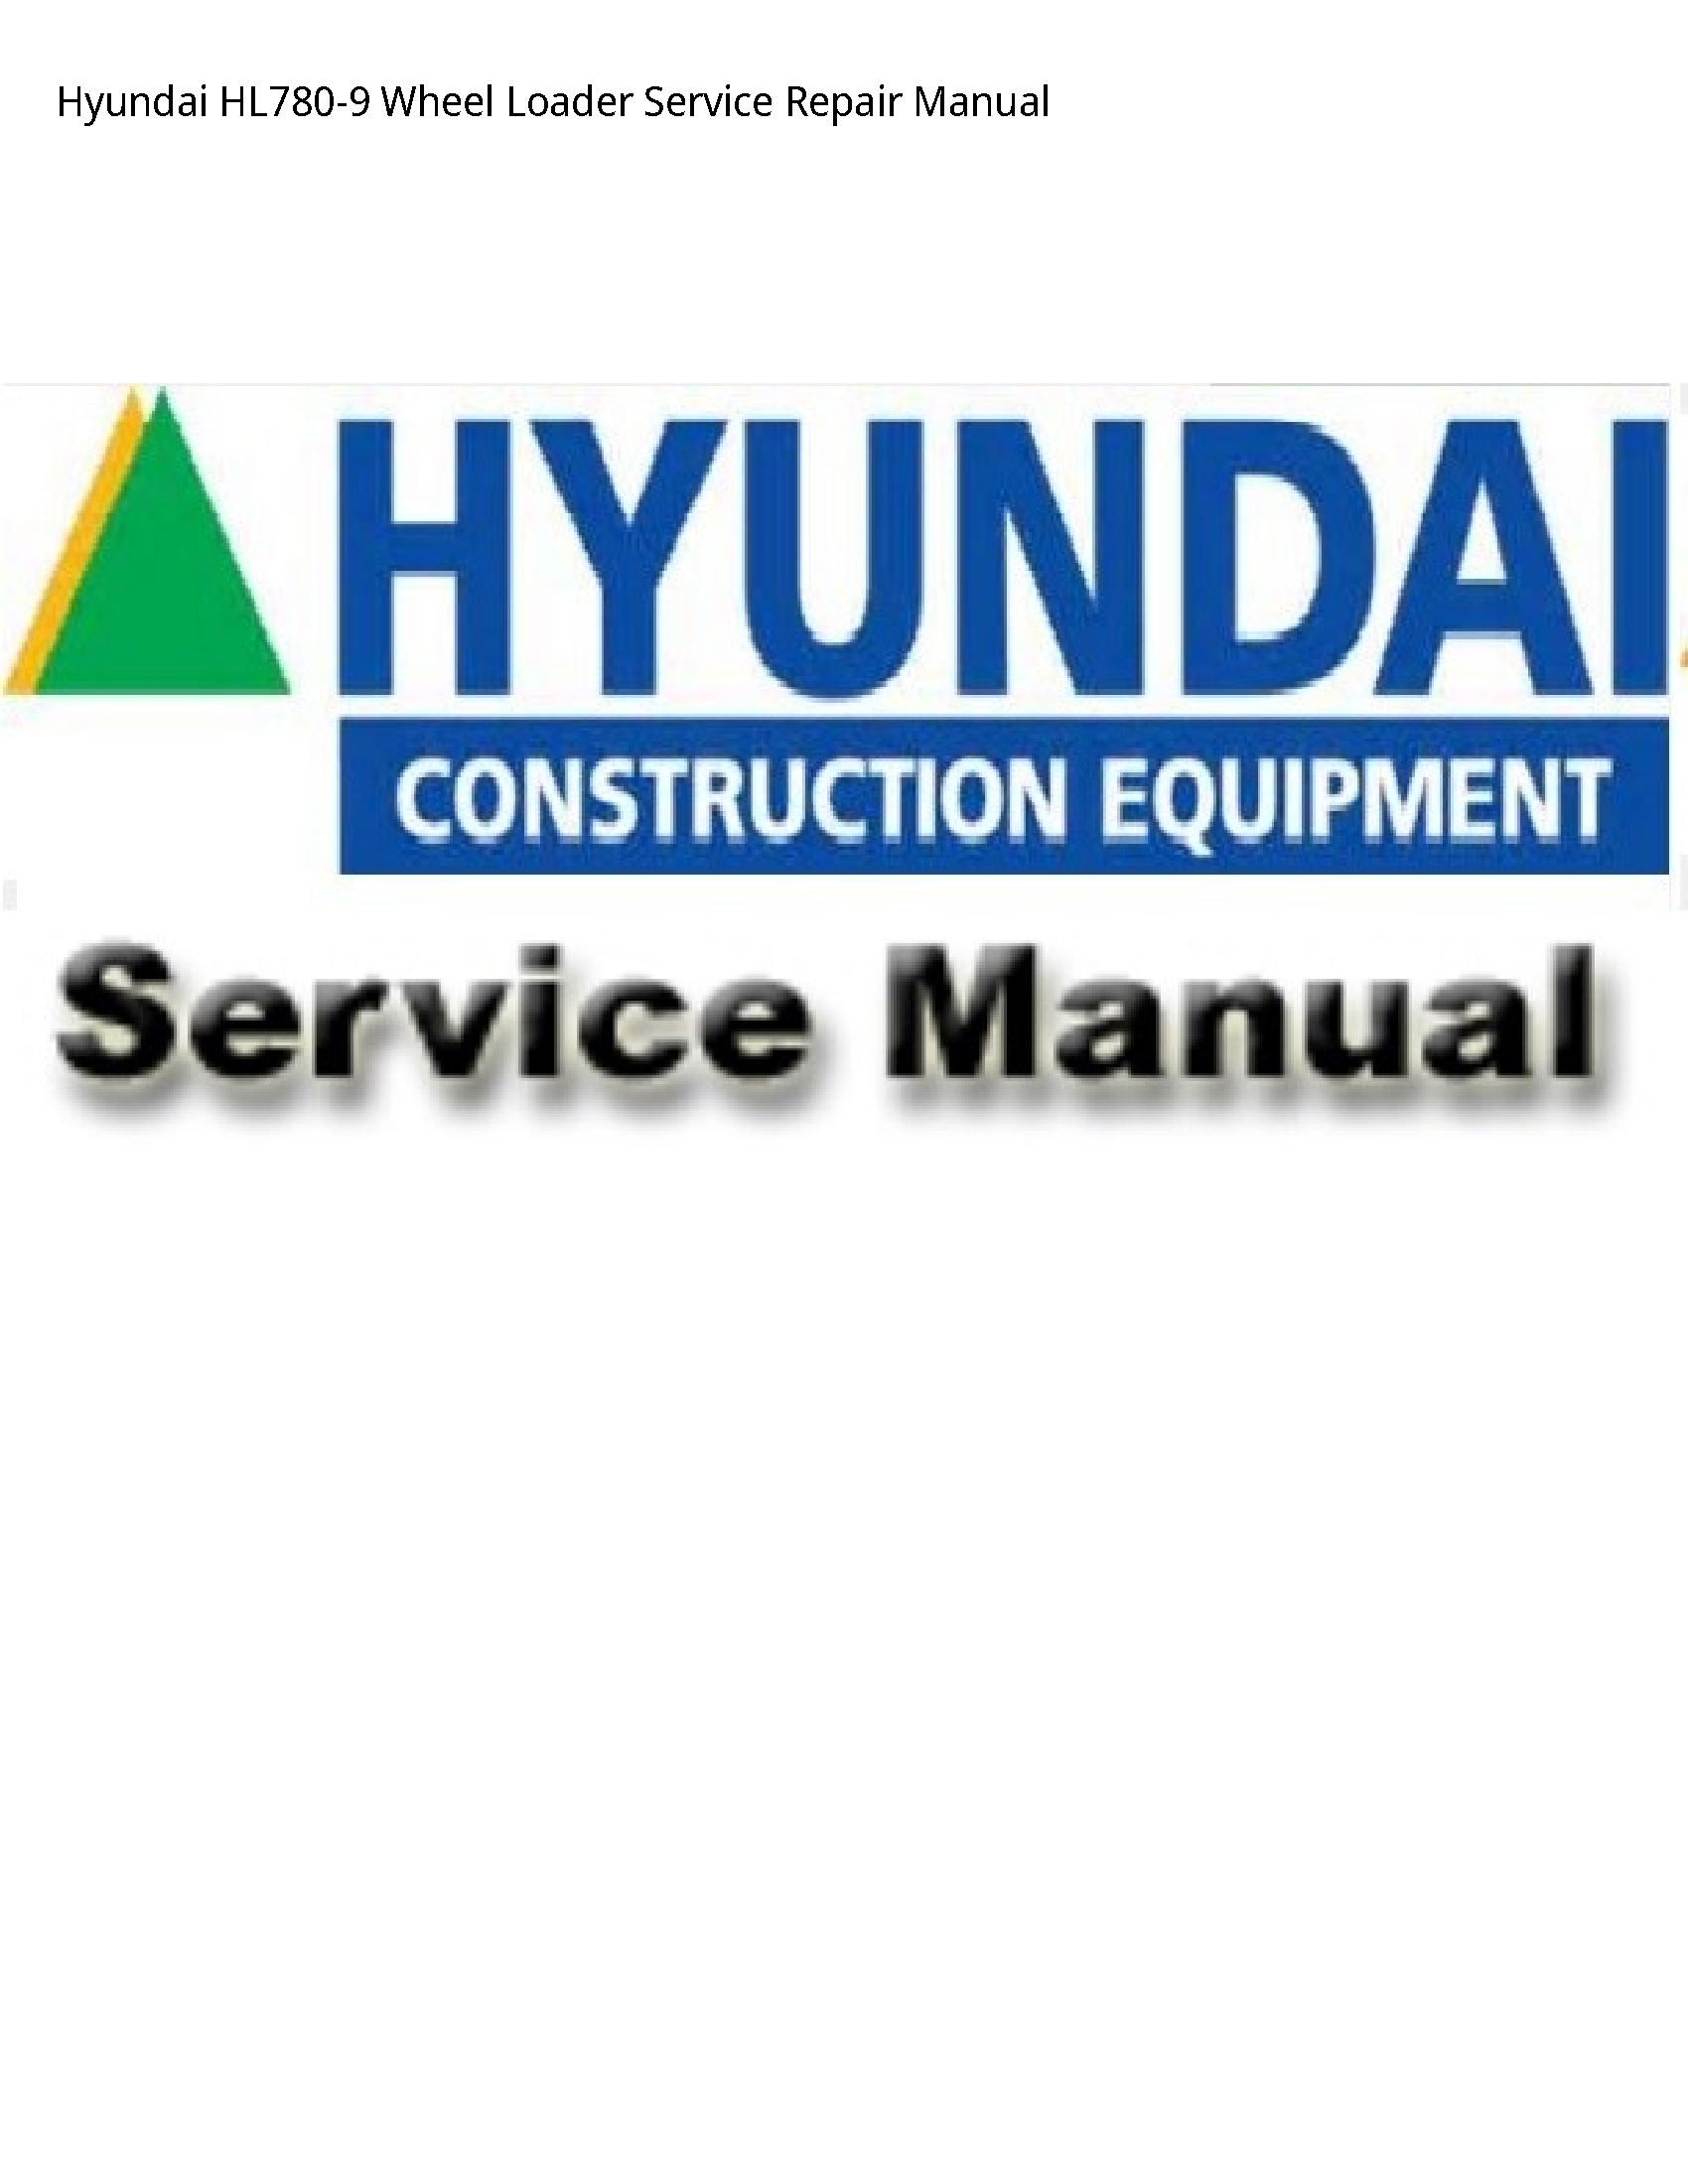 Hyundai HL780-9 Wheel Loader manual